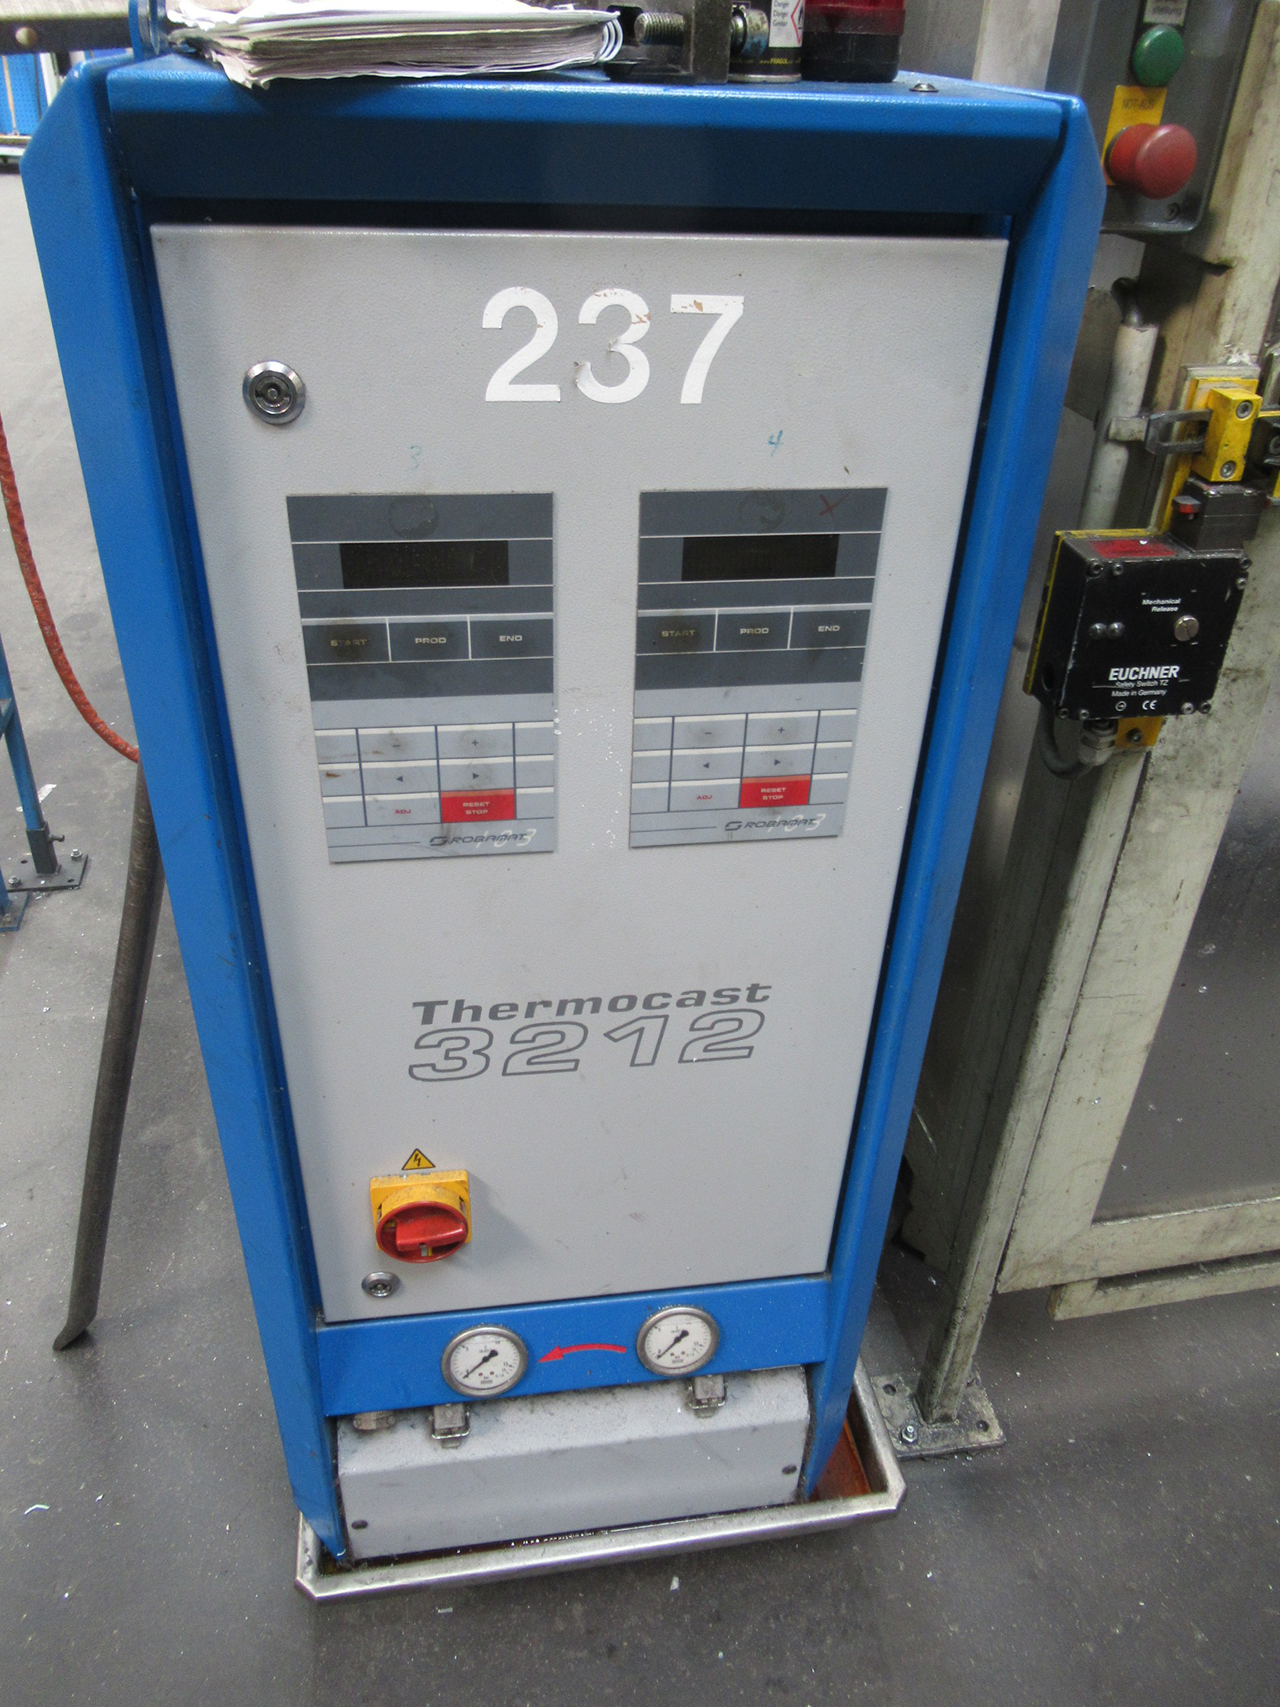 Robamat Thermocast 3212 temperature control unit ZU2110, used